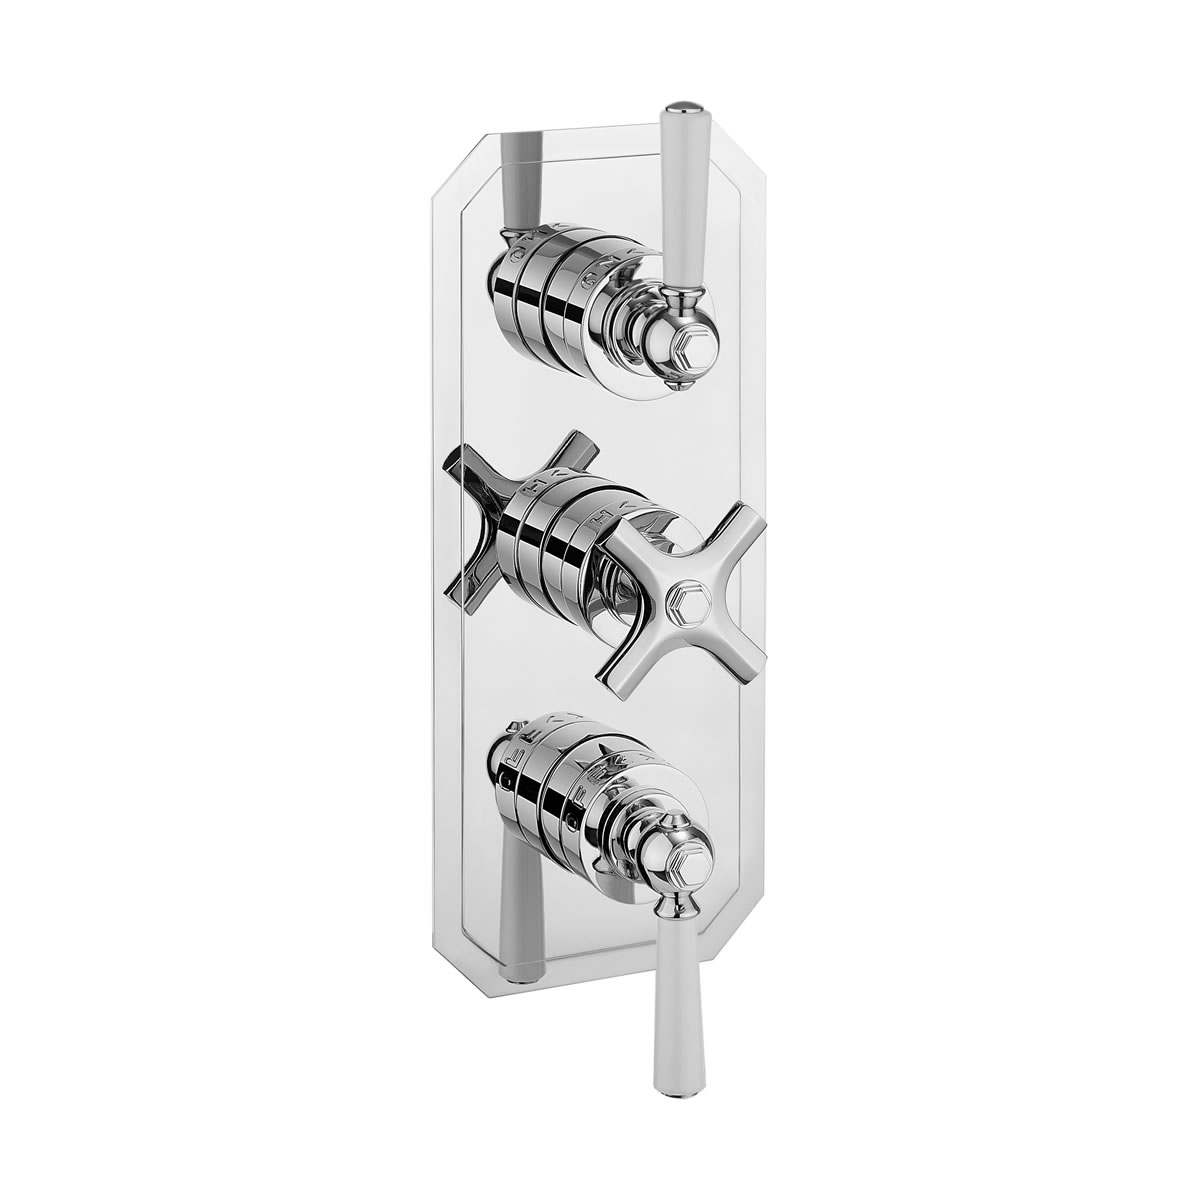 Waldorf Lever slimline thermostatic shower valve with 3 way diverter